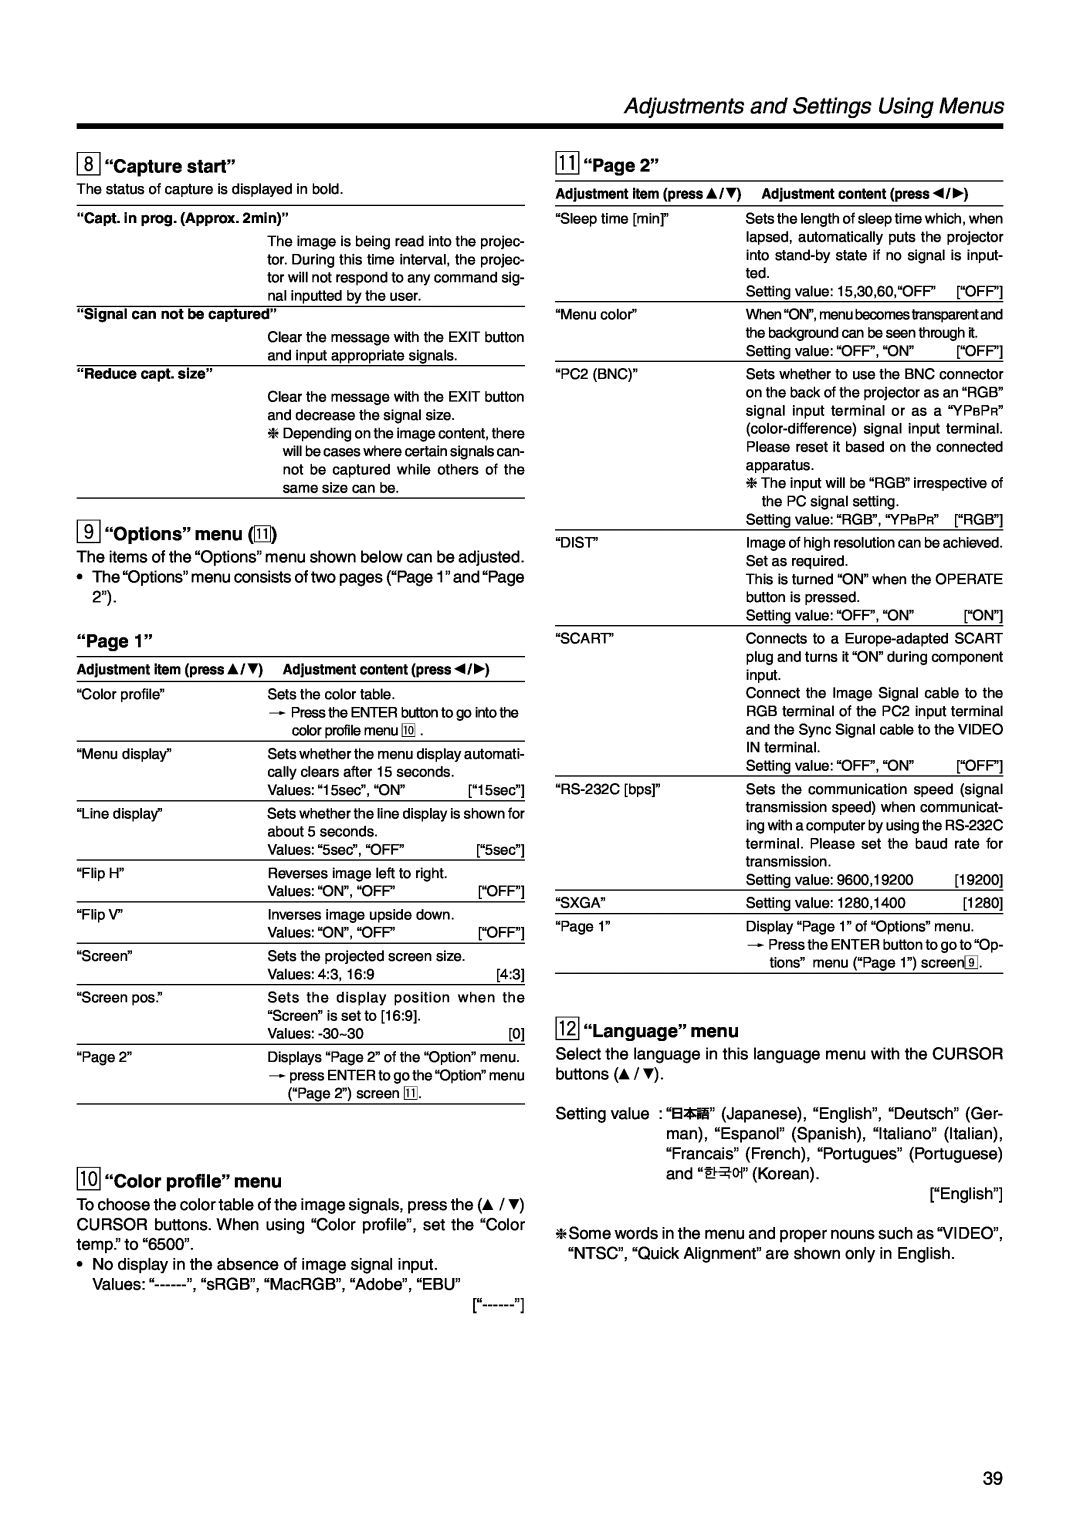 JVC DLA-SX21U manual 8 “Capture start”, 9 “Options” menu q, “Page 1”, p “Color profile” menu, q “Page 2”, w “Language” menu 